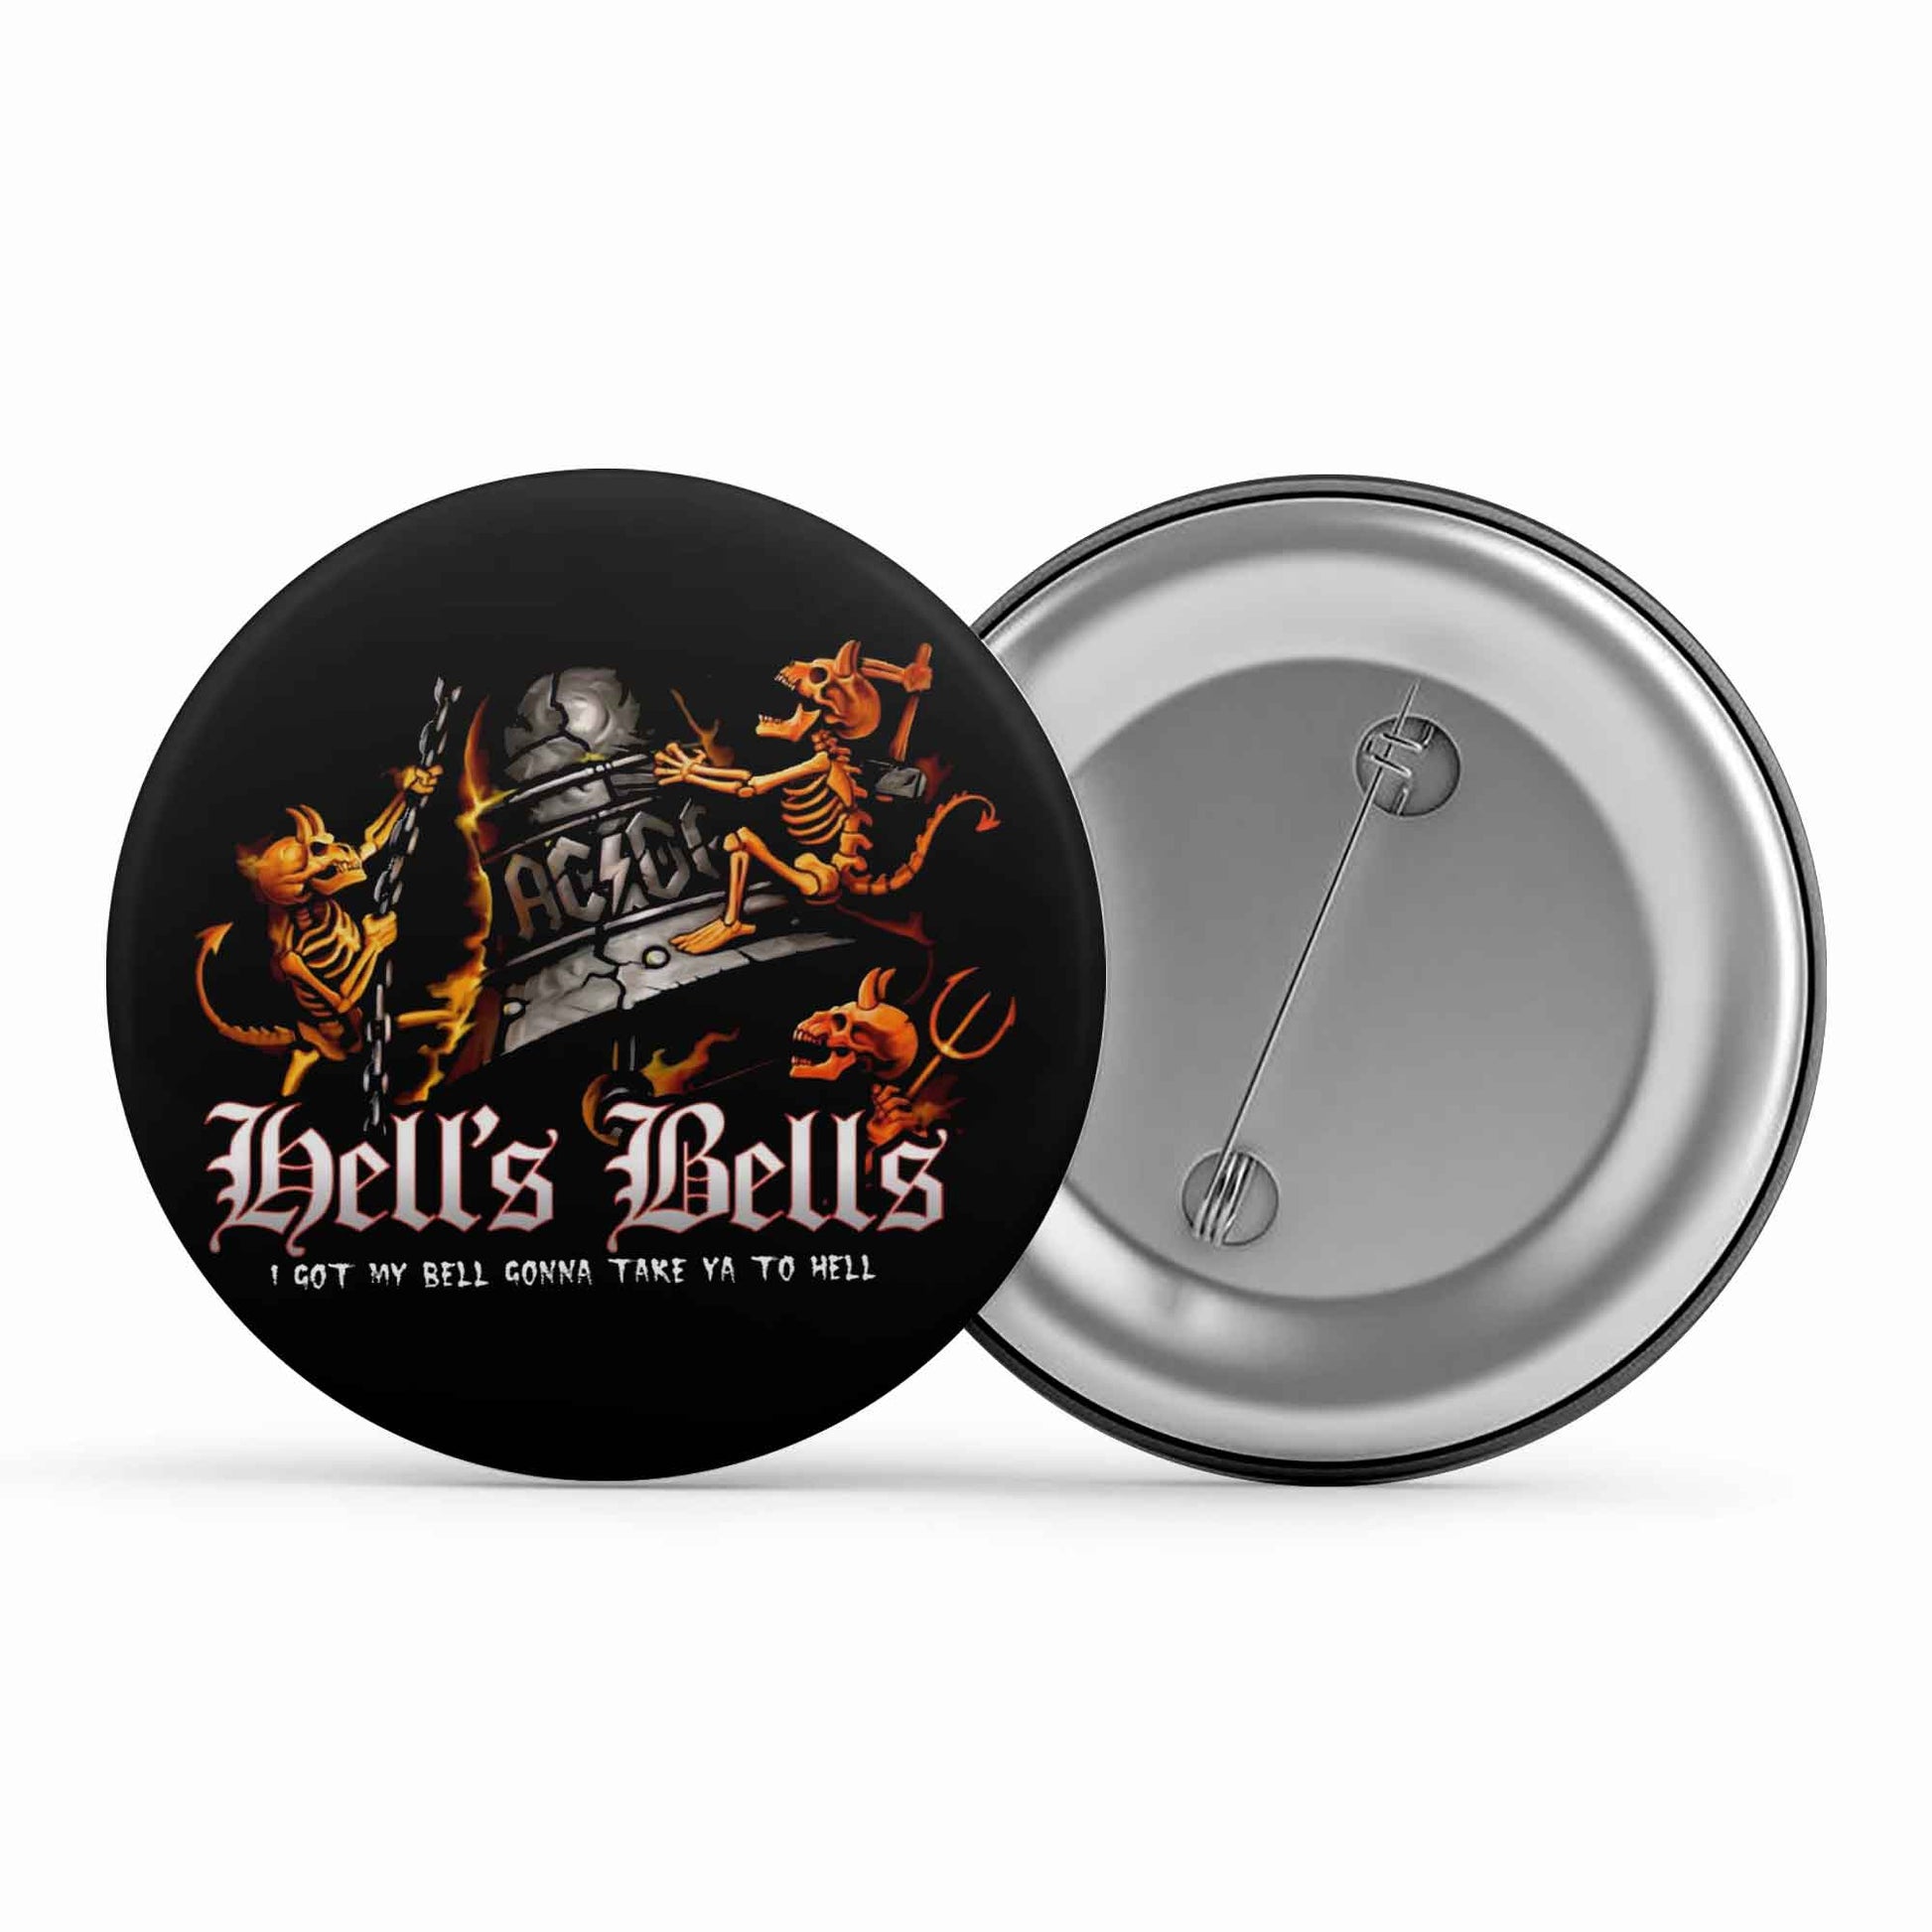 ac/dc hell's bells badge pin button music band buy online india the banyan tee tbt men women girls boys unisex